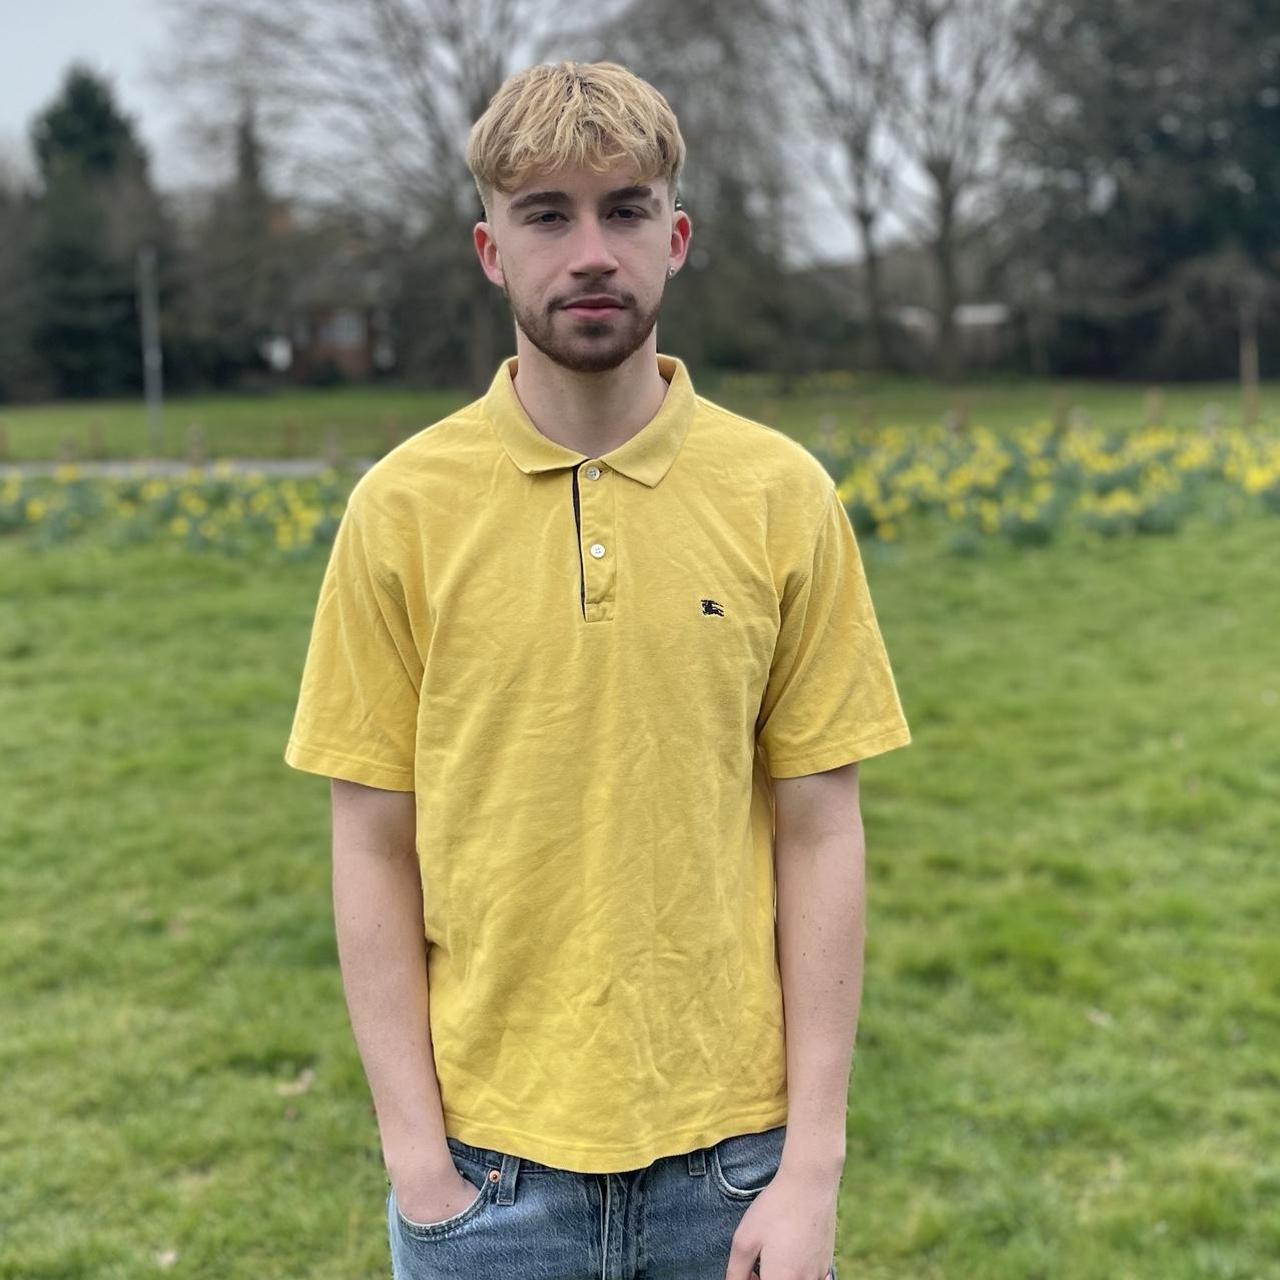 Burberry Men's Yellow Polo-shirts | Depop